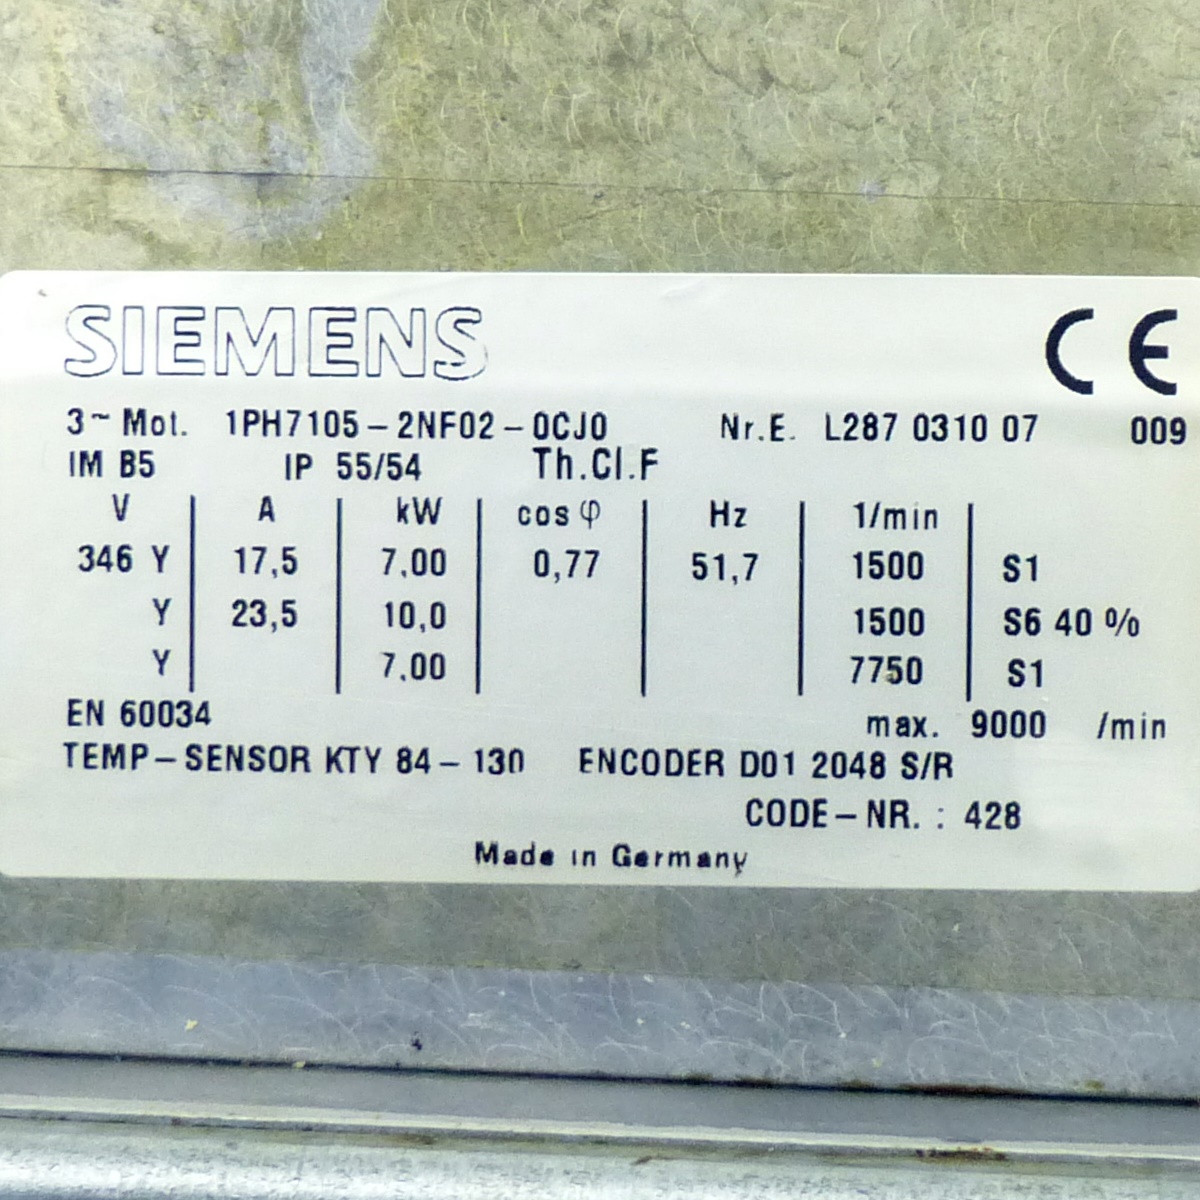 Maschinenteil24, Siemens Kompakt-Asynchronmotor